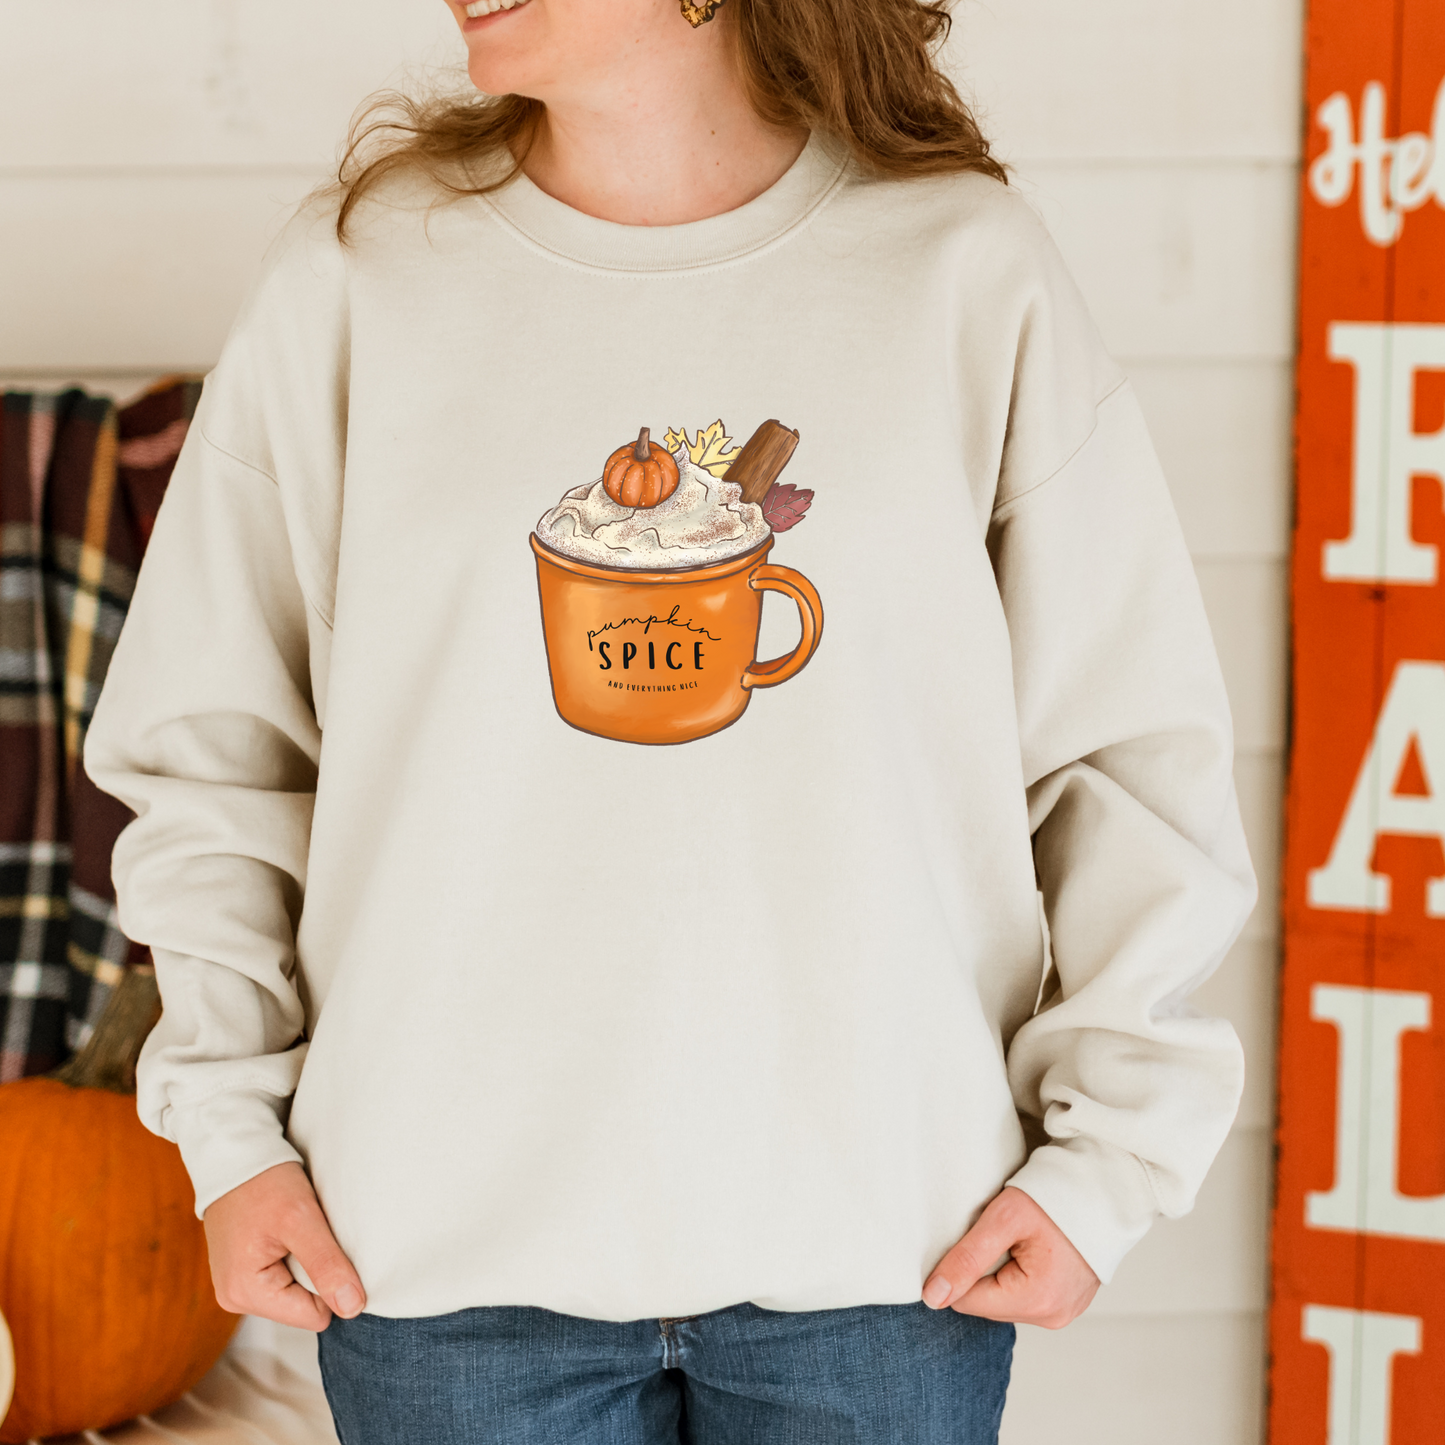 Pumpkin Spice Sweatshirt